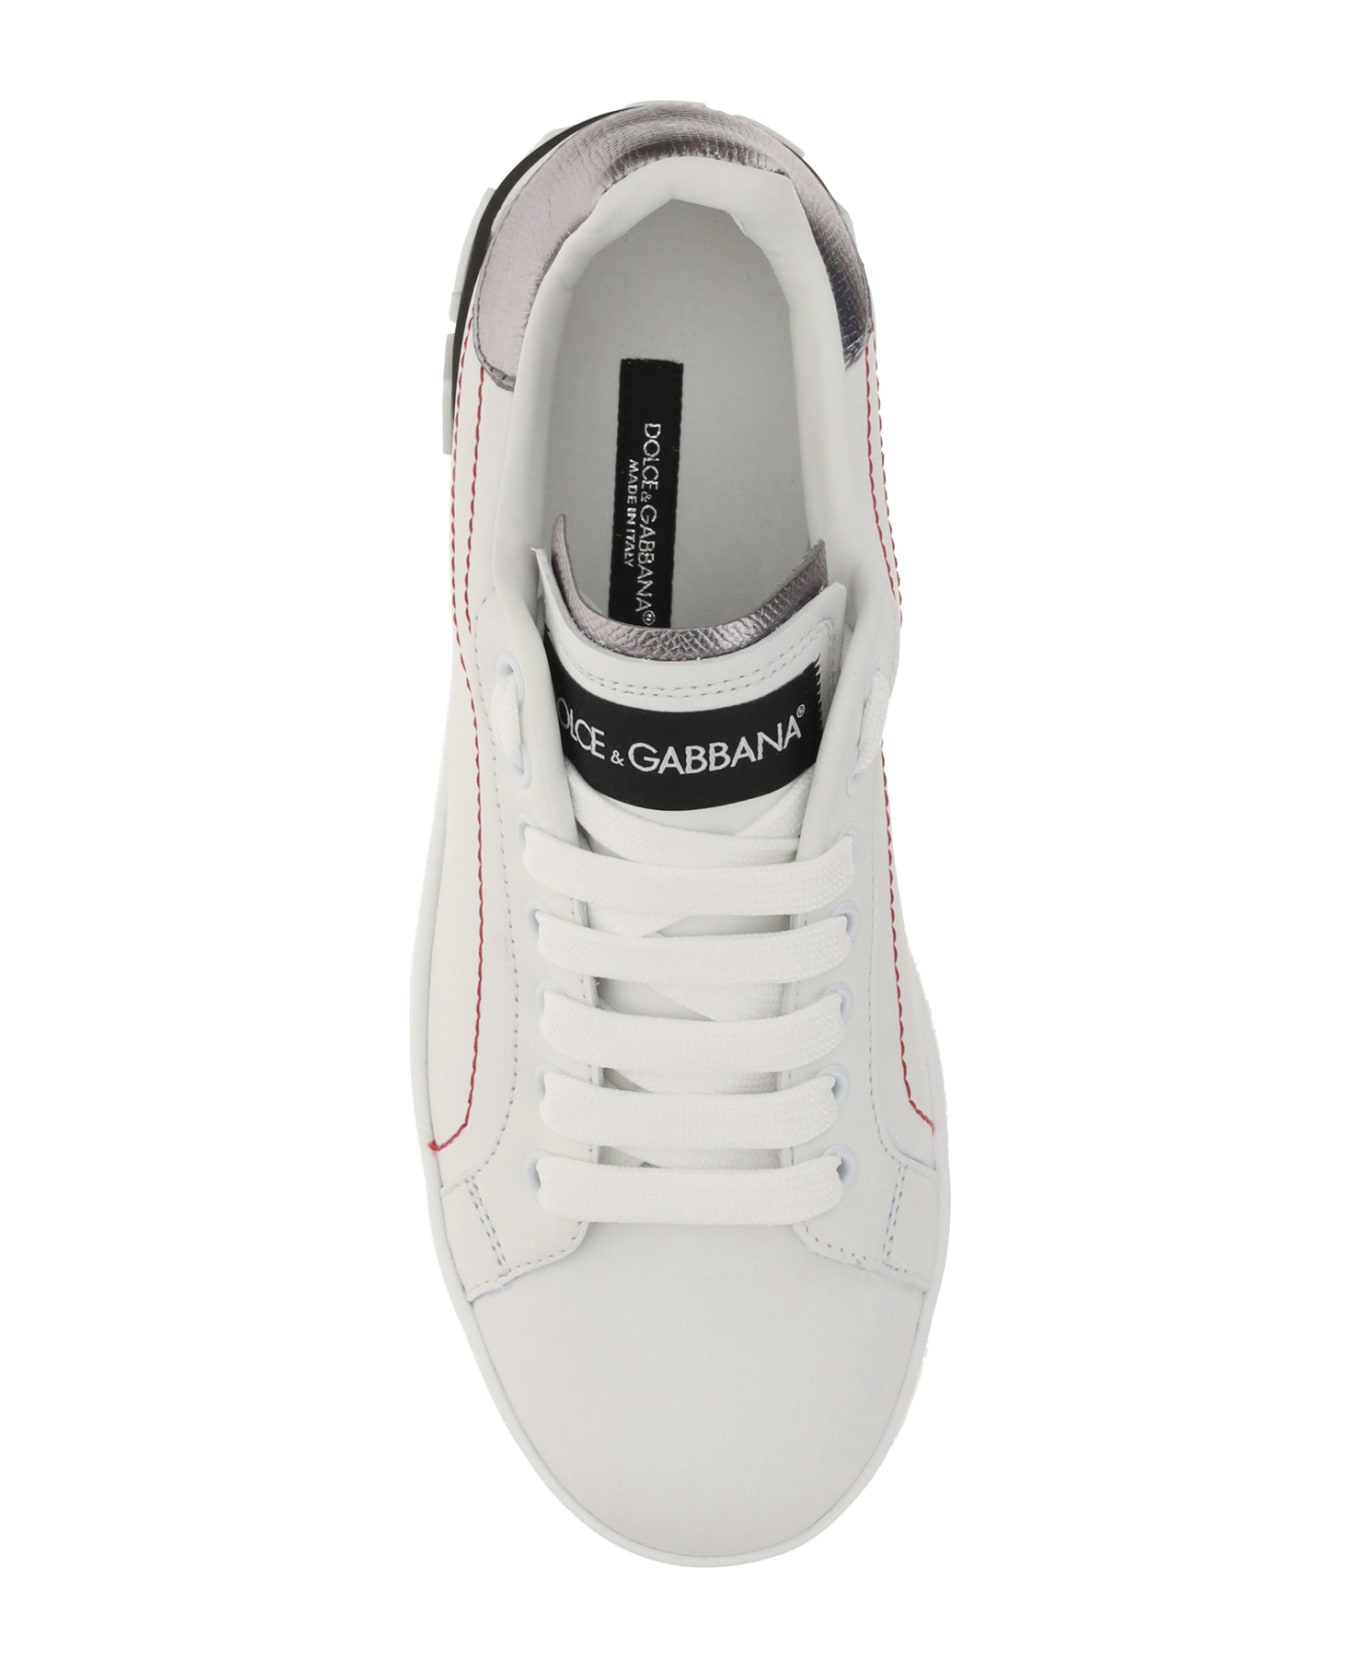 Dolce & Gabbana Sneakers - Bianco/argento